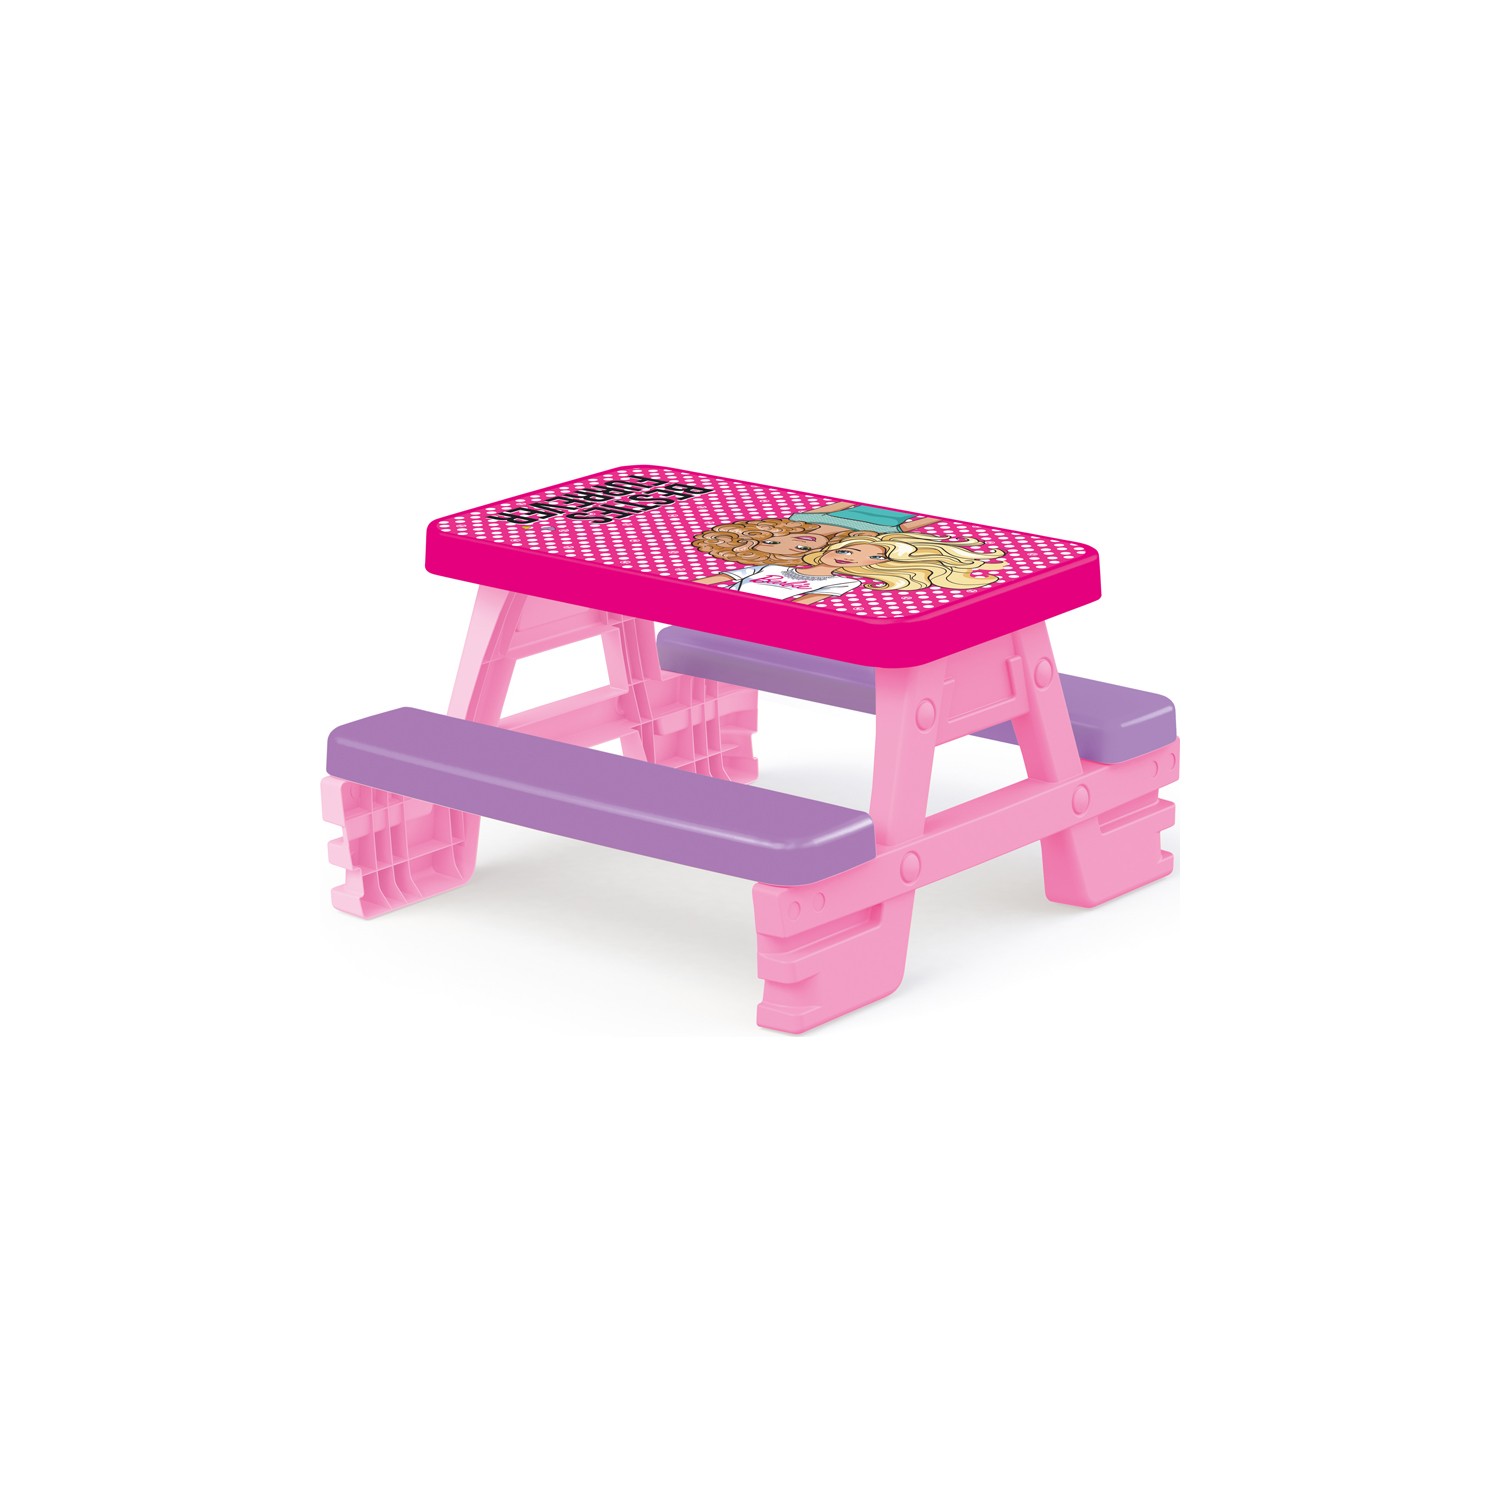 Стол Barbie для пикника детский детский стол для малышей детский стол студийный стол для детей детский стол для обучения детский стол